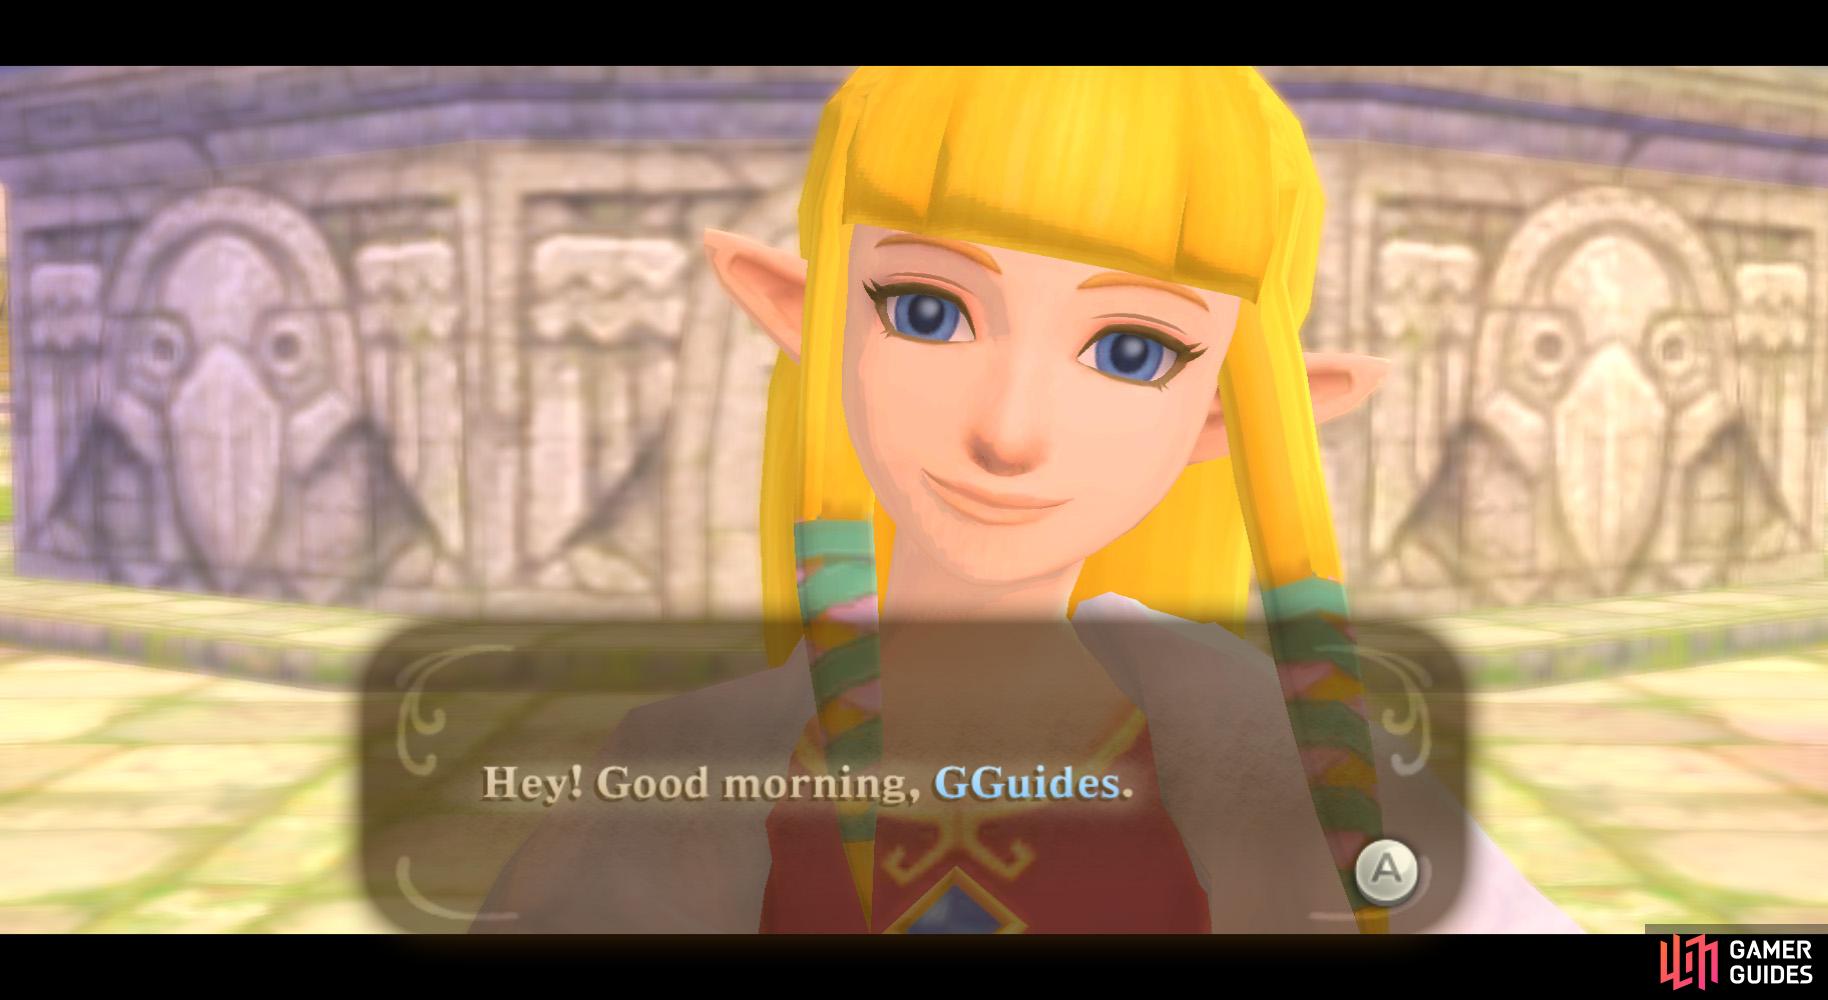 This is Zelda, the games namesake.